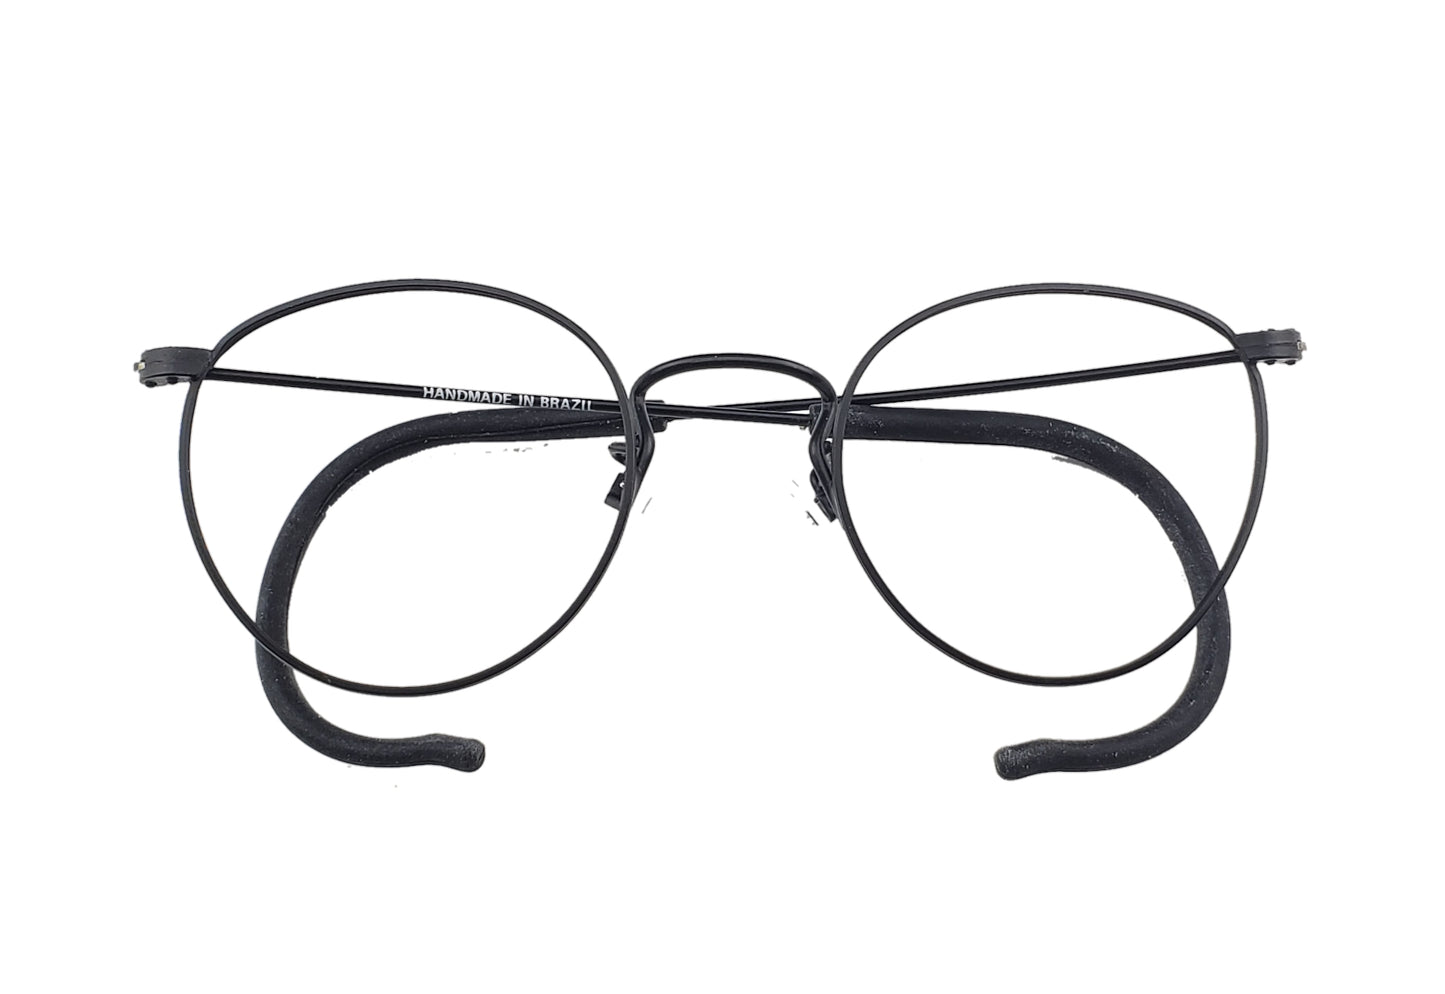 LMP Optical Supply Universal Cable Temple Conversion Eyeglasses & Sunglasses